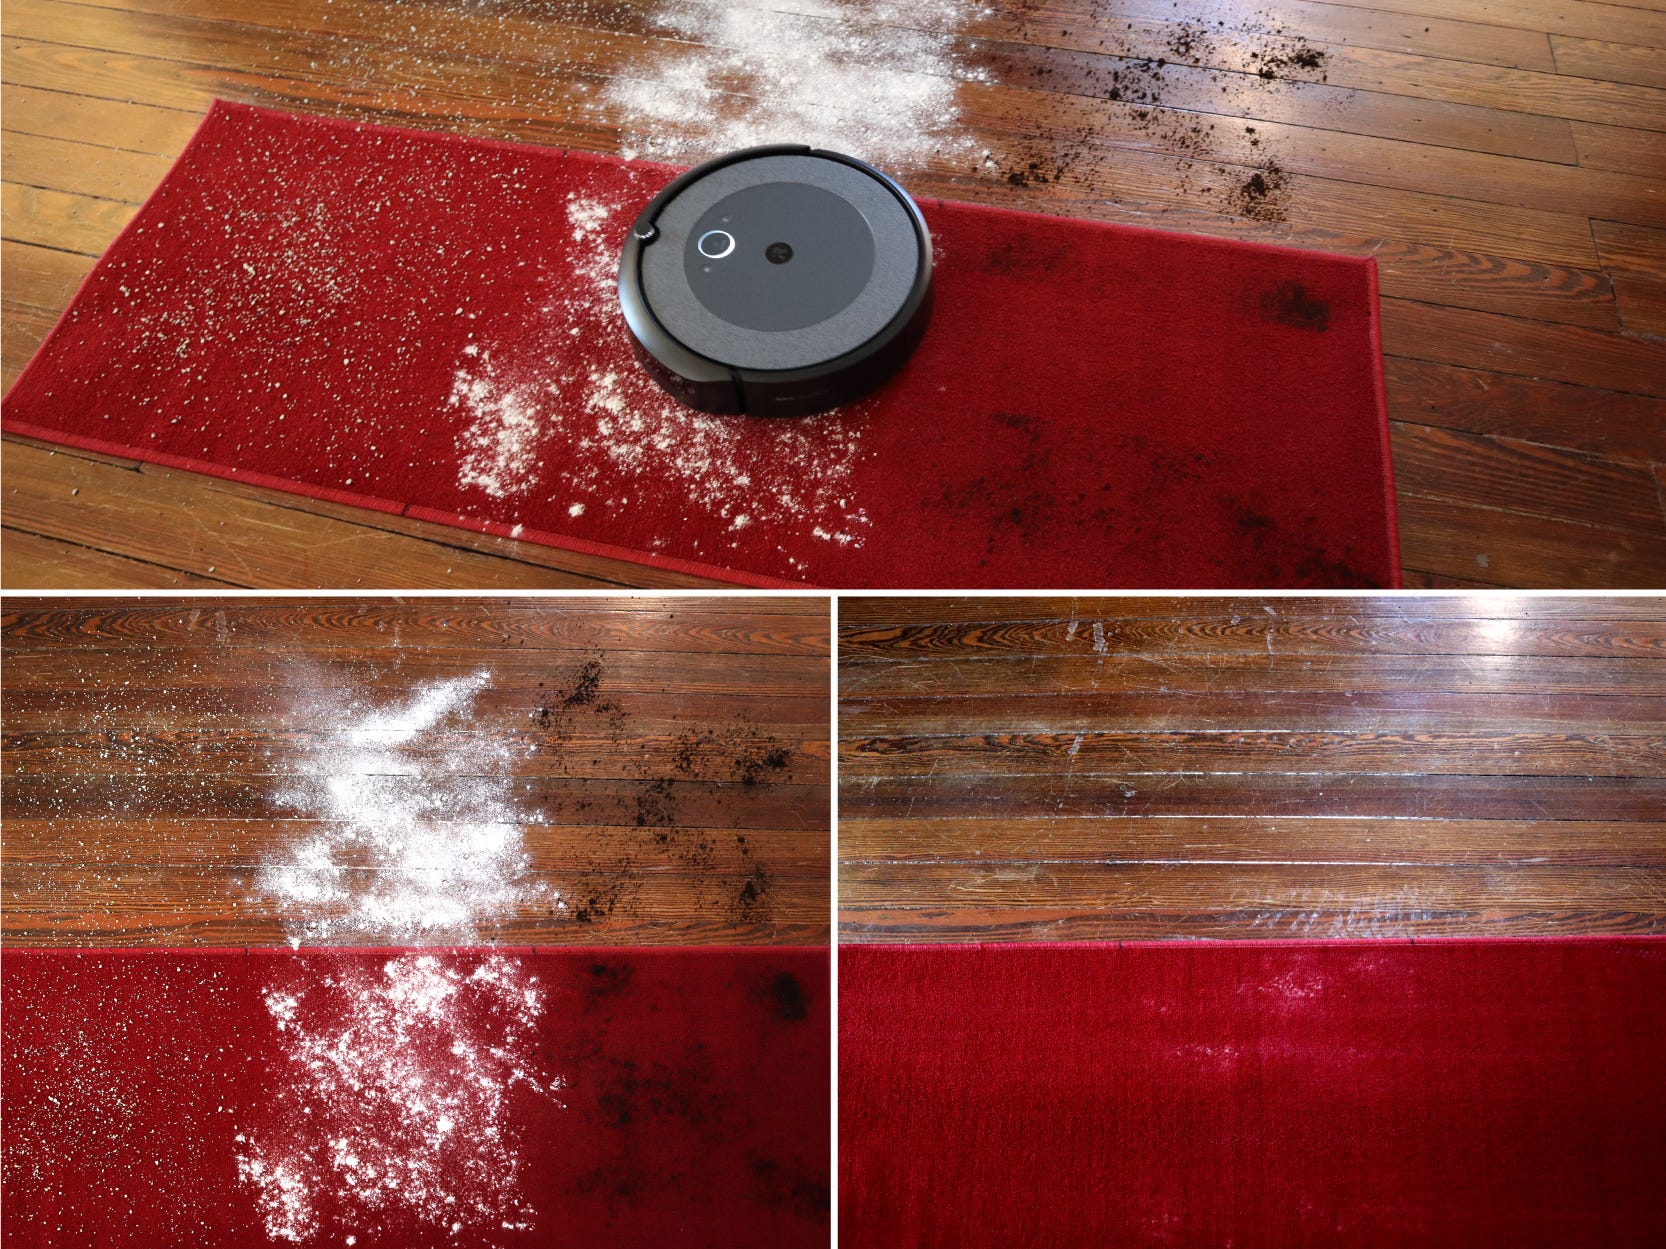 Best Robot Vacuum for carpet 2021 Roomba i3+